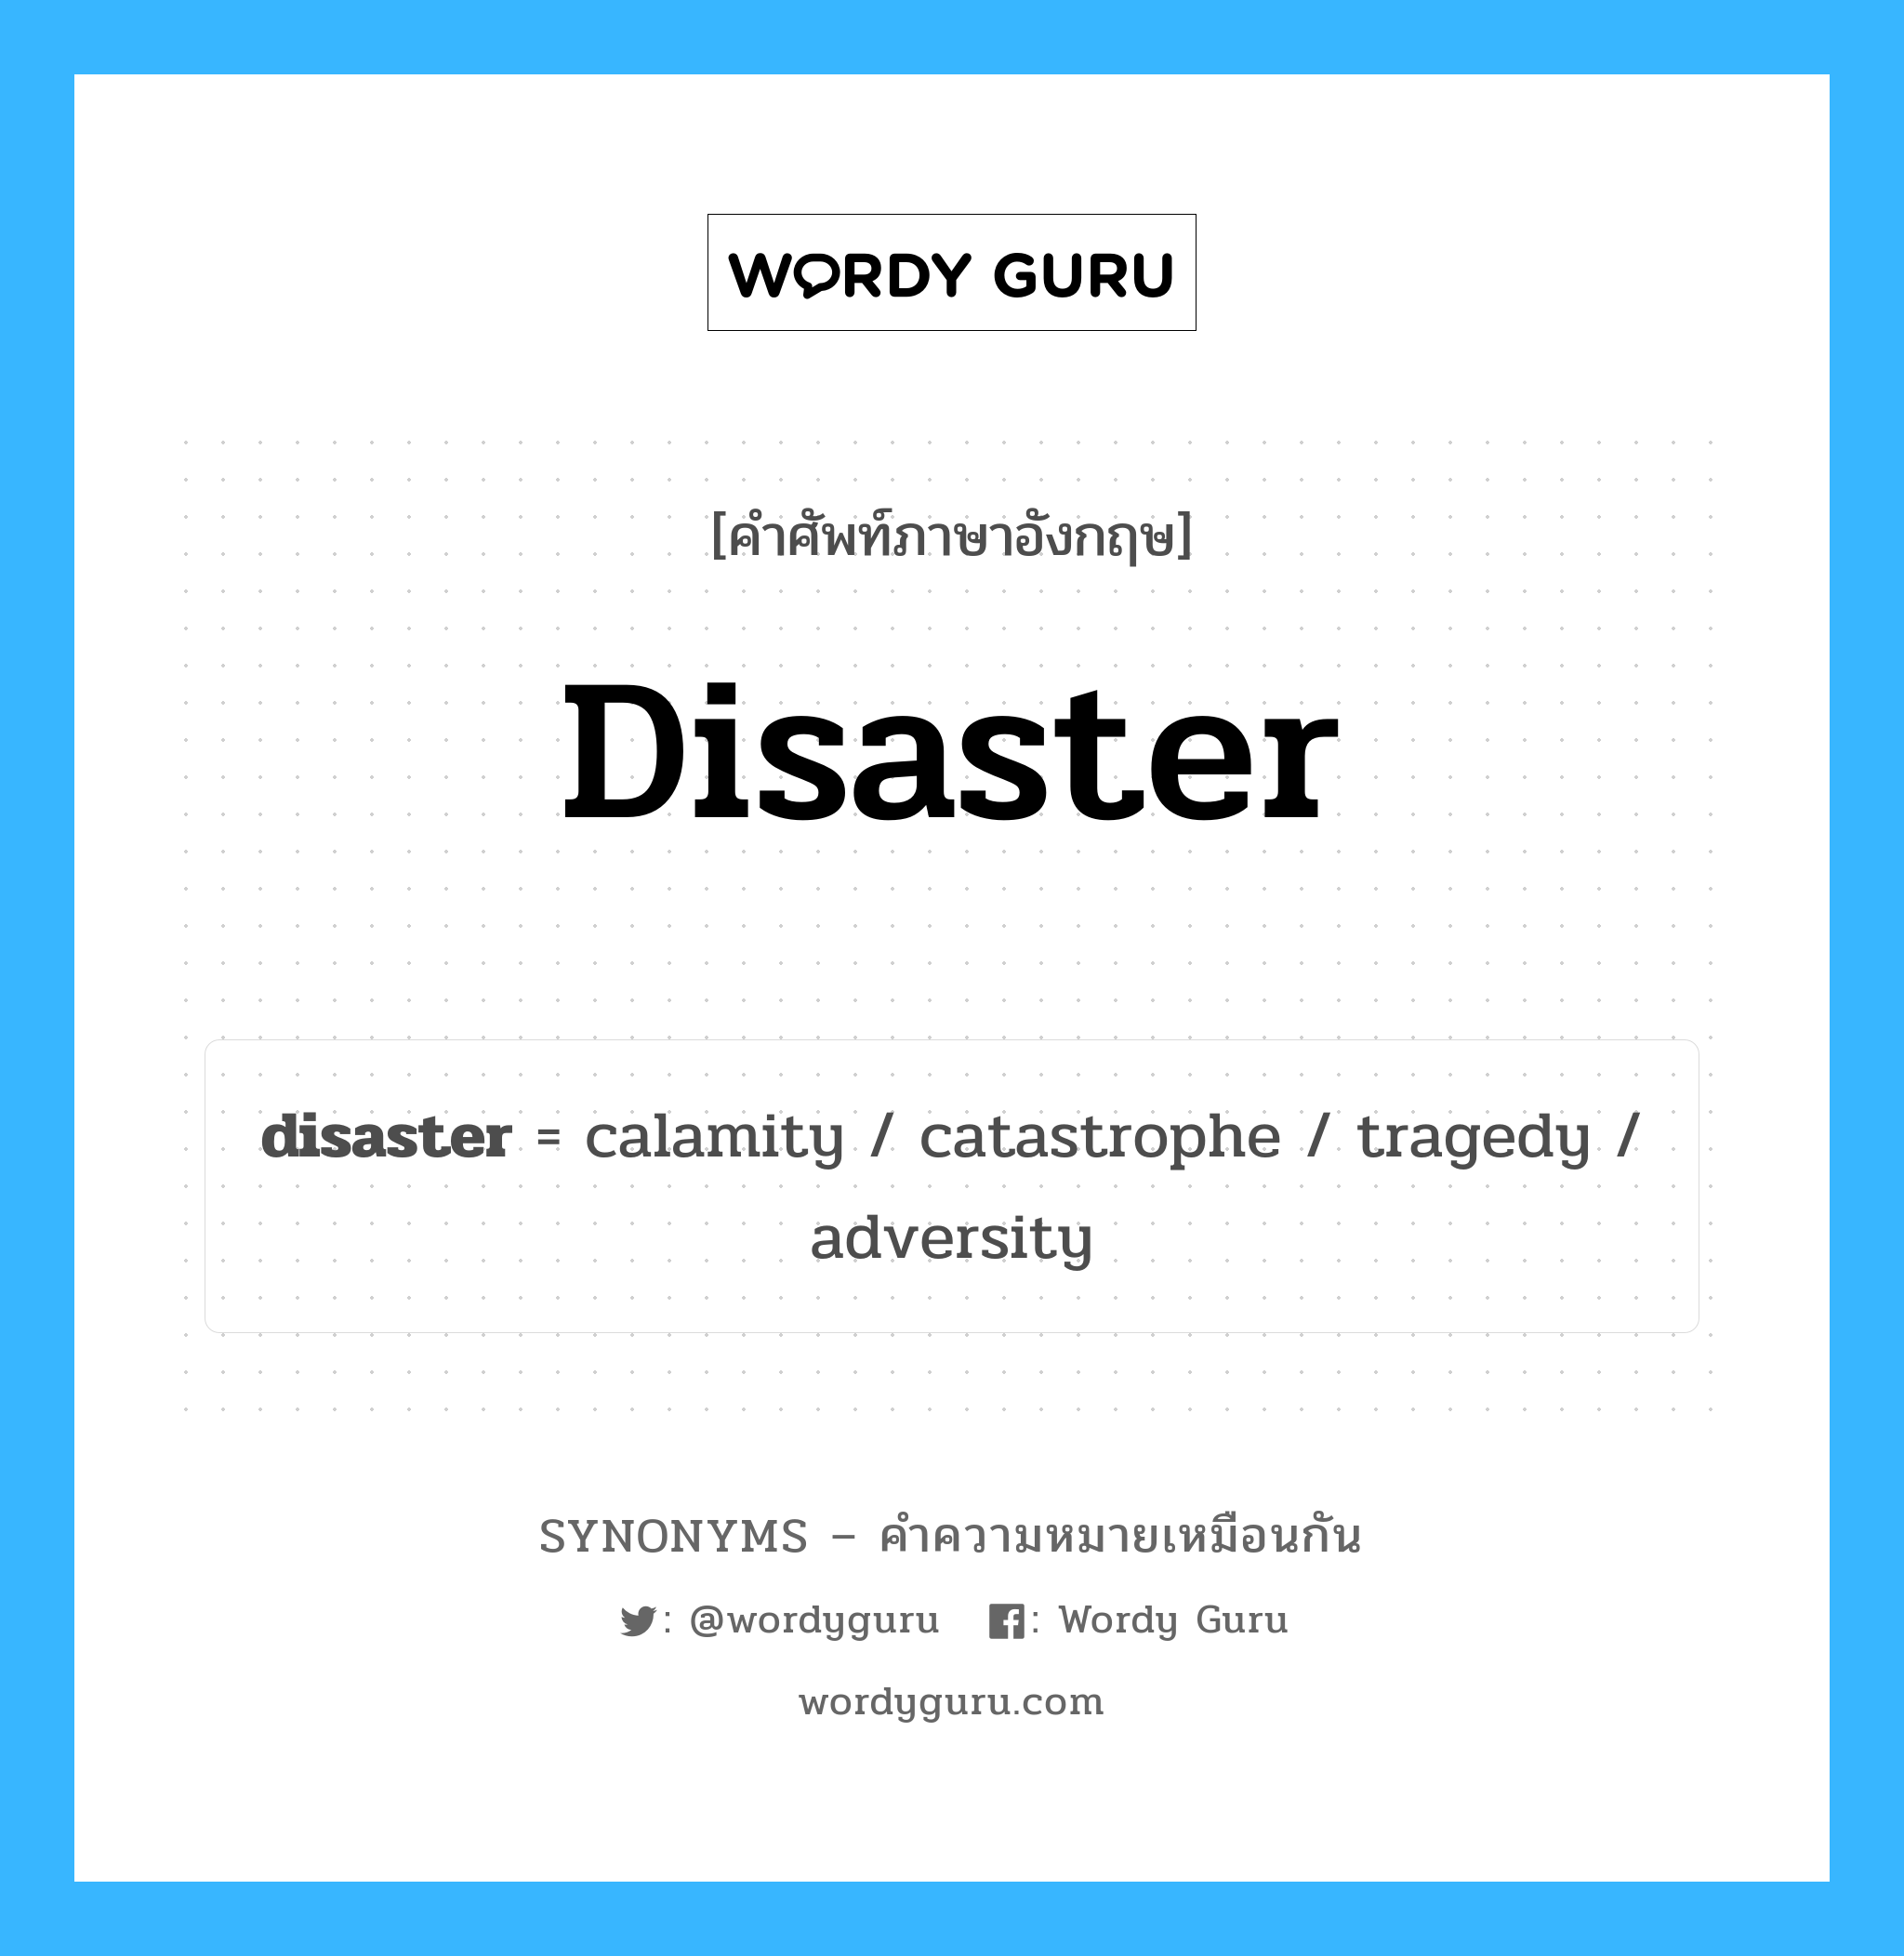 calamity เป็นหนึ่งใน disaster และมีคำอื่น ๆ อีกดังนี้, คำศัพท์ภาษาอังกฤษ calamity ความหมายคล้ายกันกับ disaster แปลว่า ภาวนา หมวด disaster